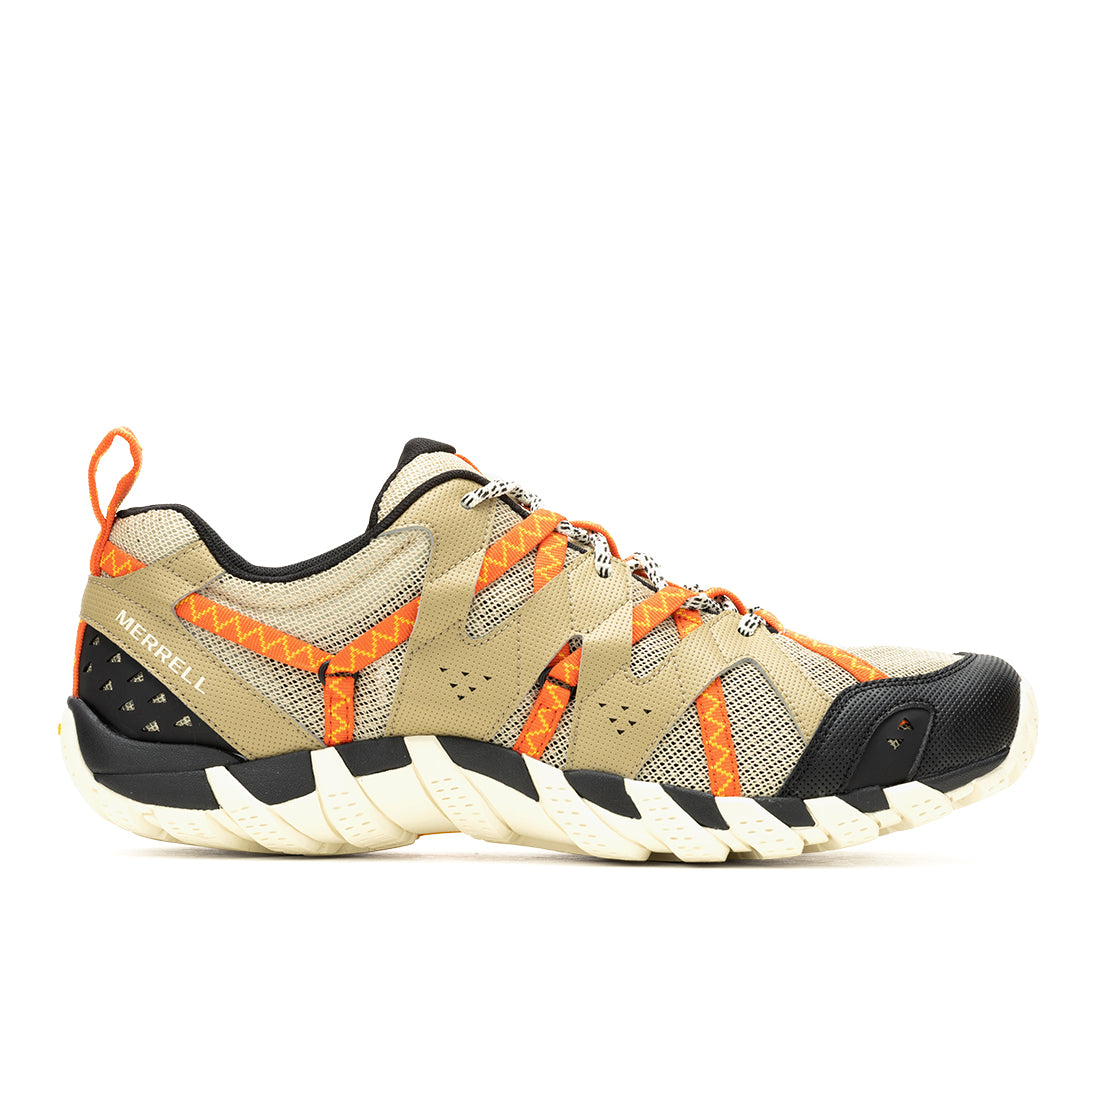 Waterpro Maipo 2 – Coyote/Tangerine Womens Hydro Hiking Shoes